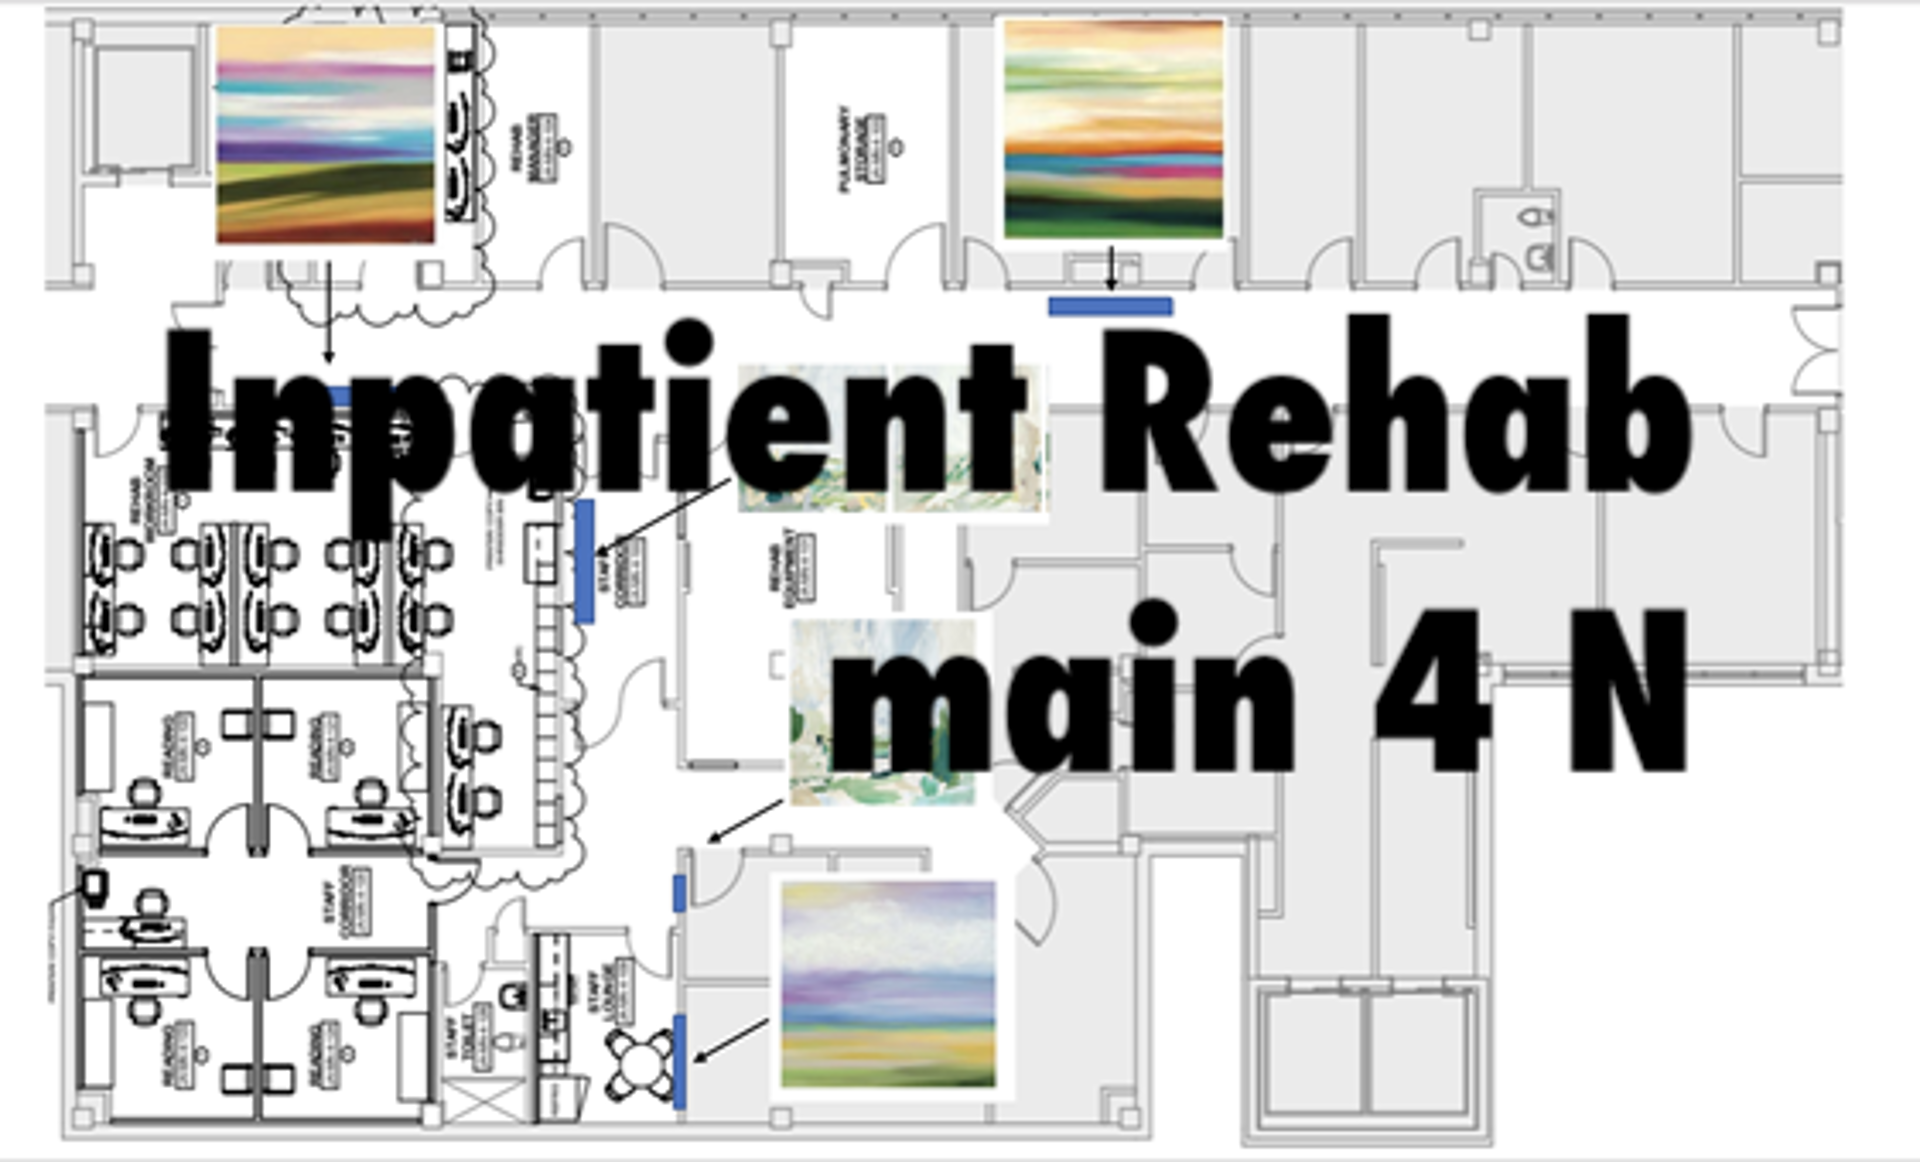 BMC -Inpatient Rehab - Main 4 North 6 PRINTS ON CANVAS by Printwork